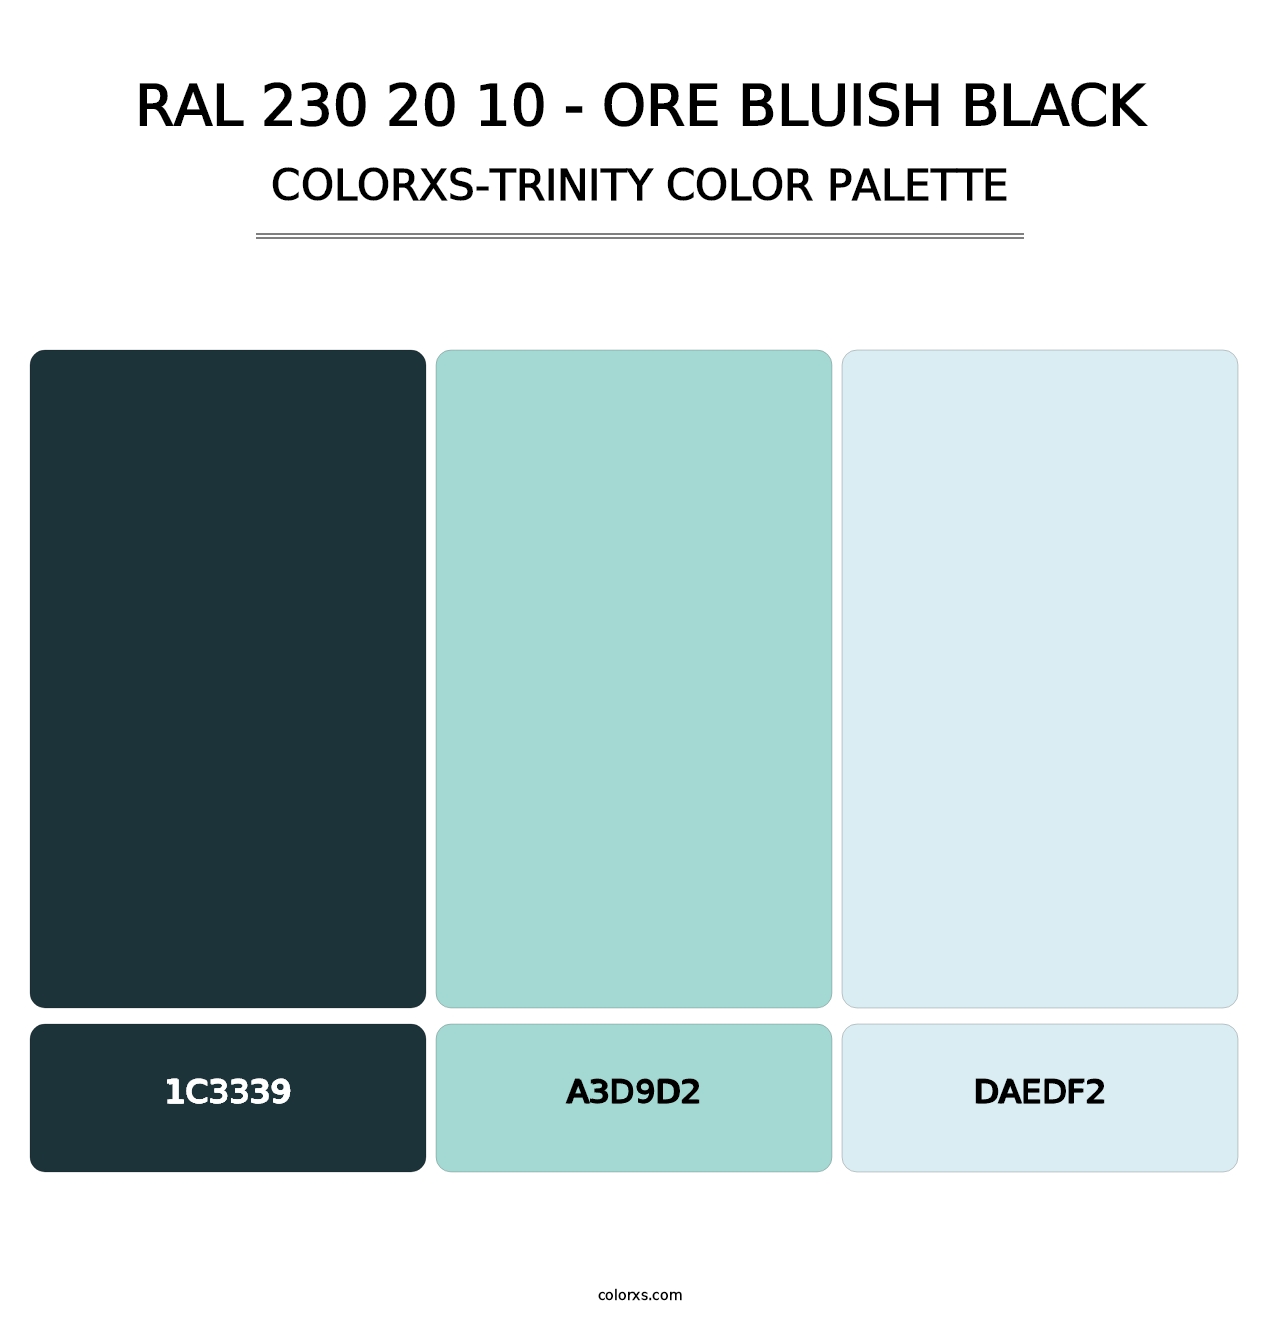 RAL 230 20 10 - Ore Bluish Black - Colorxs Trinity Palette